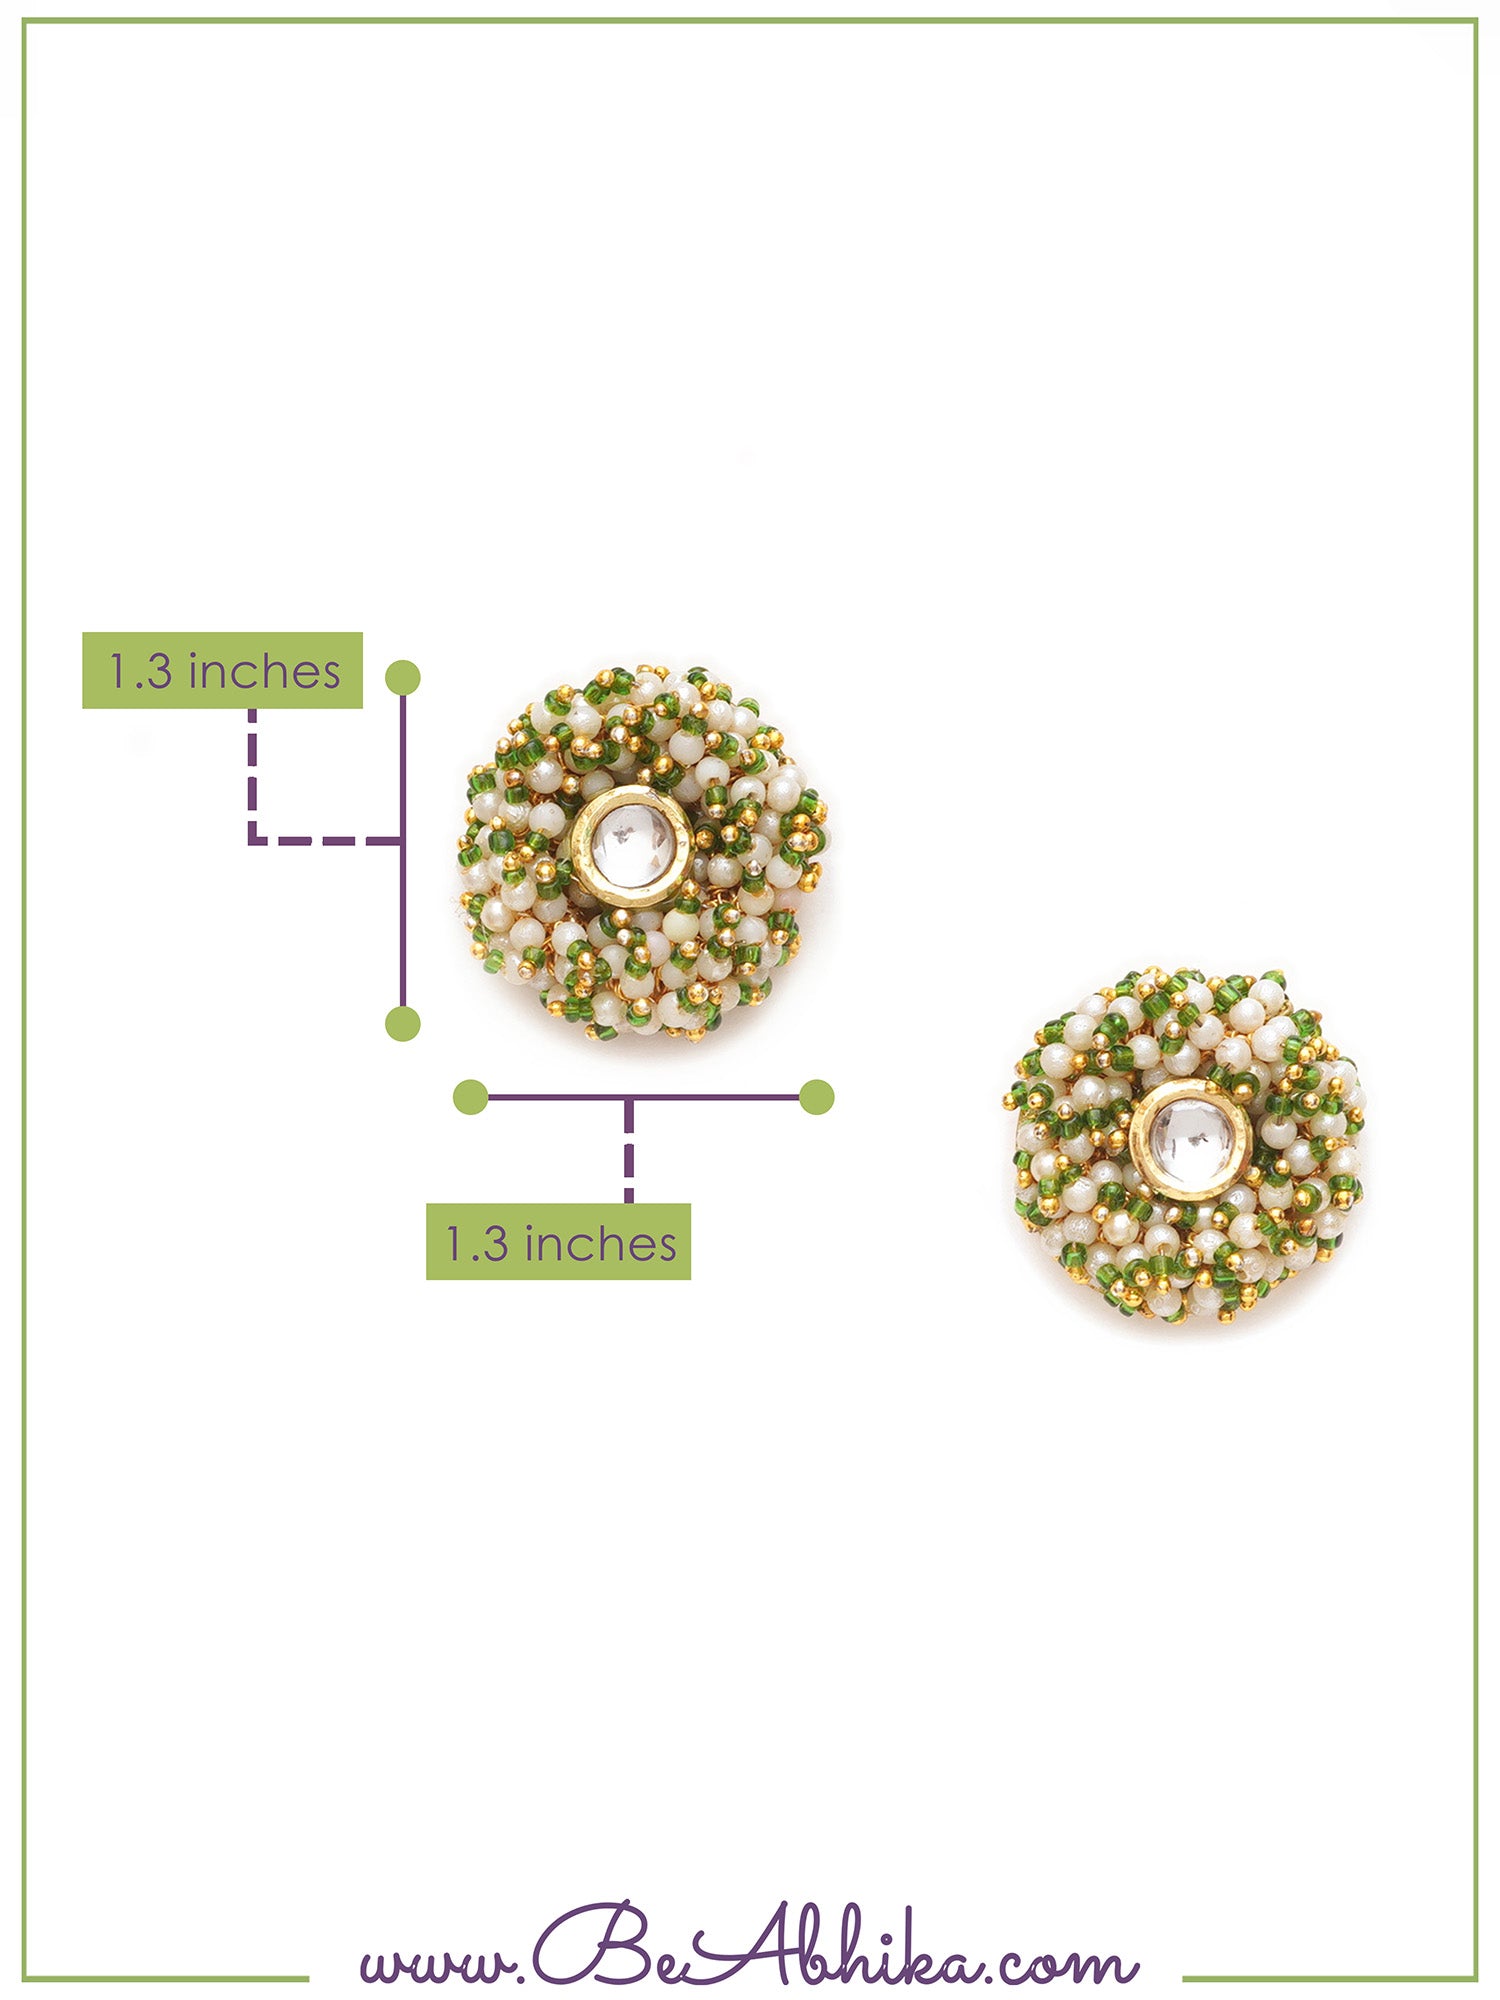 Gold Tone Green & White Garden Of Pearl Kundan Earrings